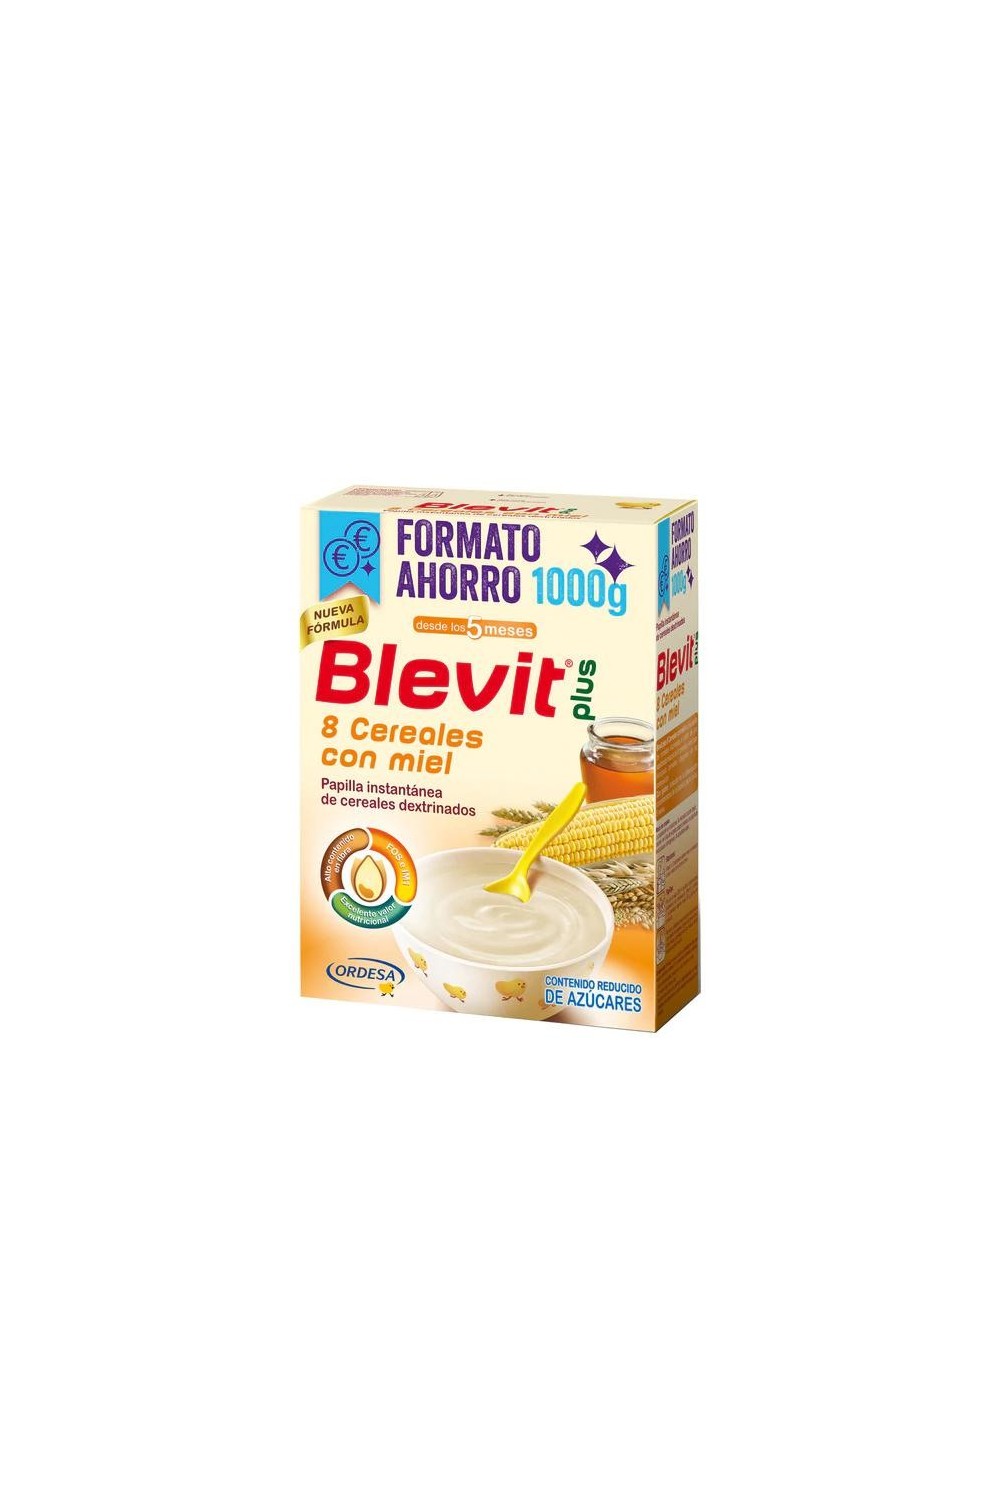 Ordesa Blevit 8 Cereals Snack With Honey Instant